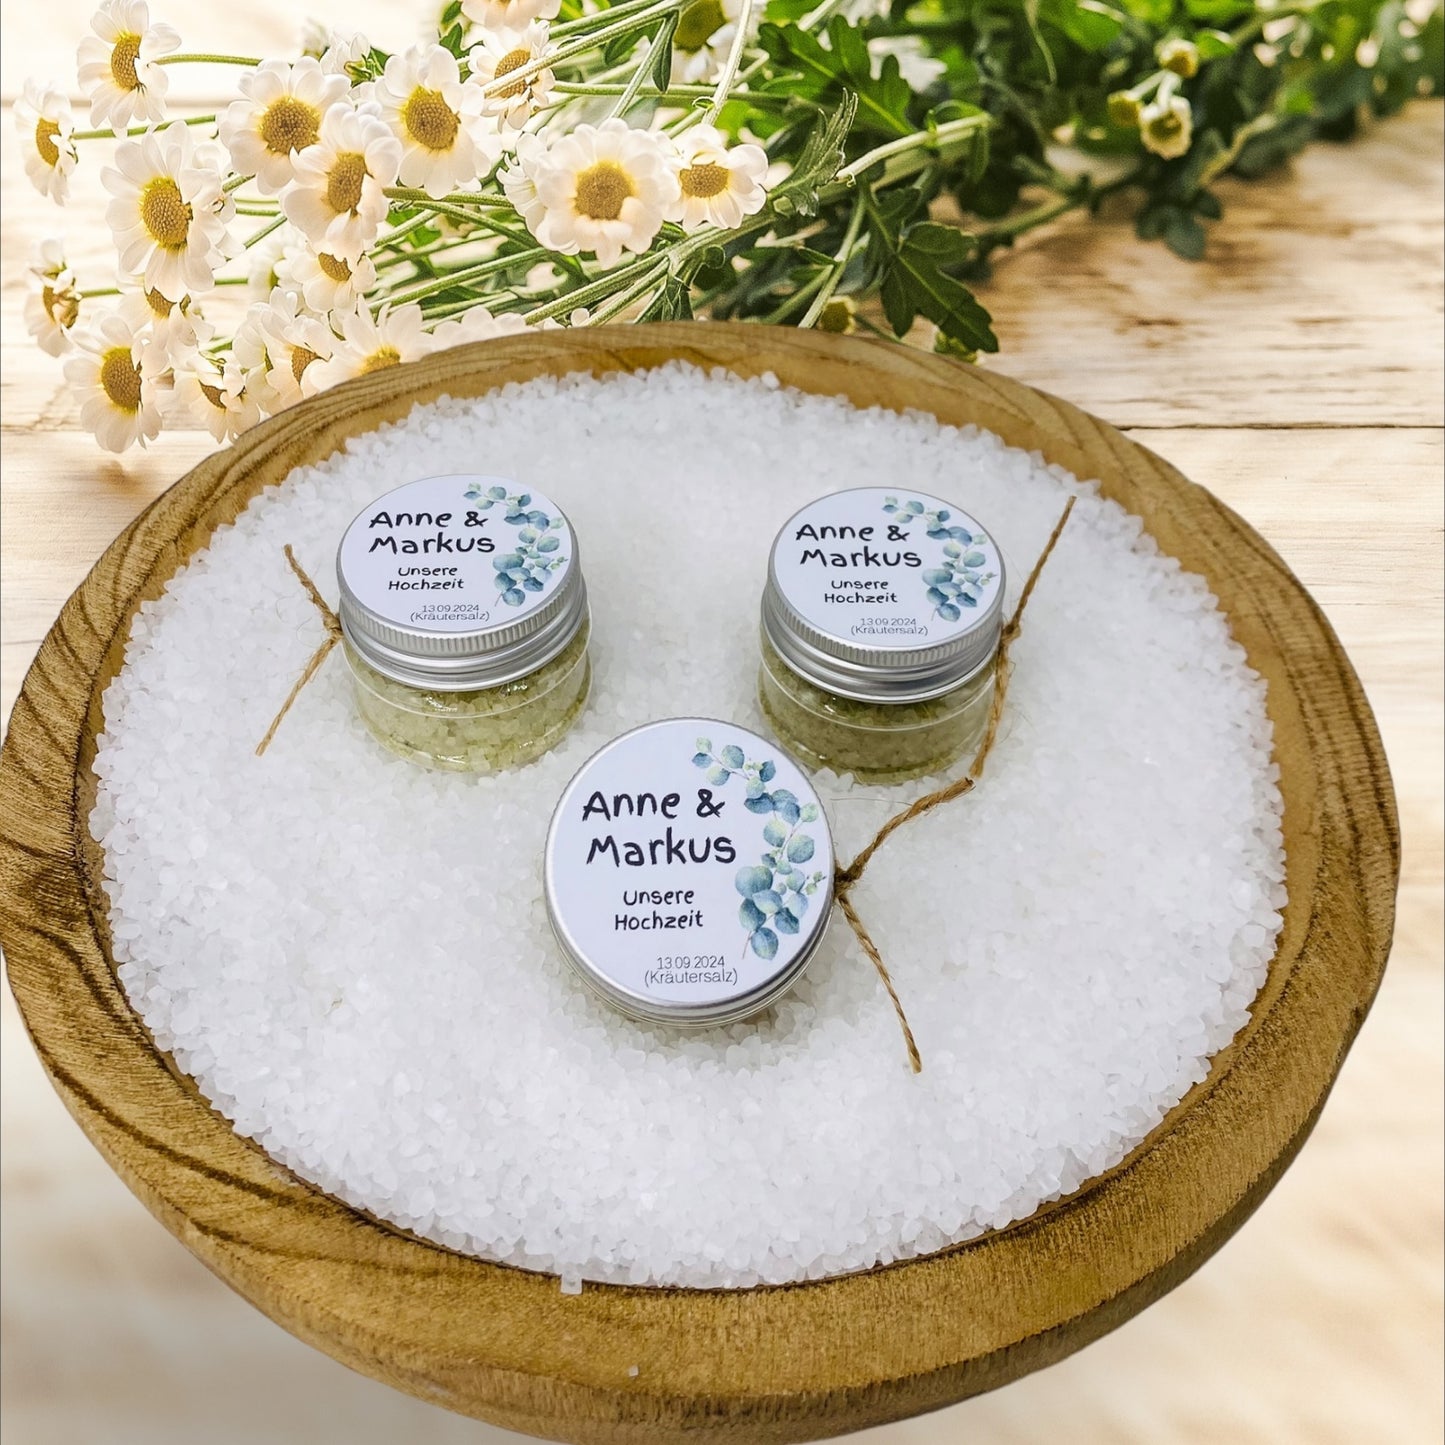 Natural guest gift: Elegant jar with high-quality herbal salt for enjoyable memories, weddings, birthdays